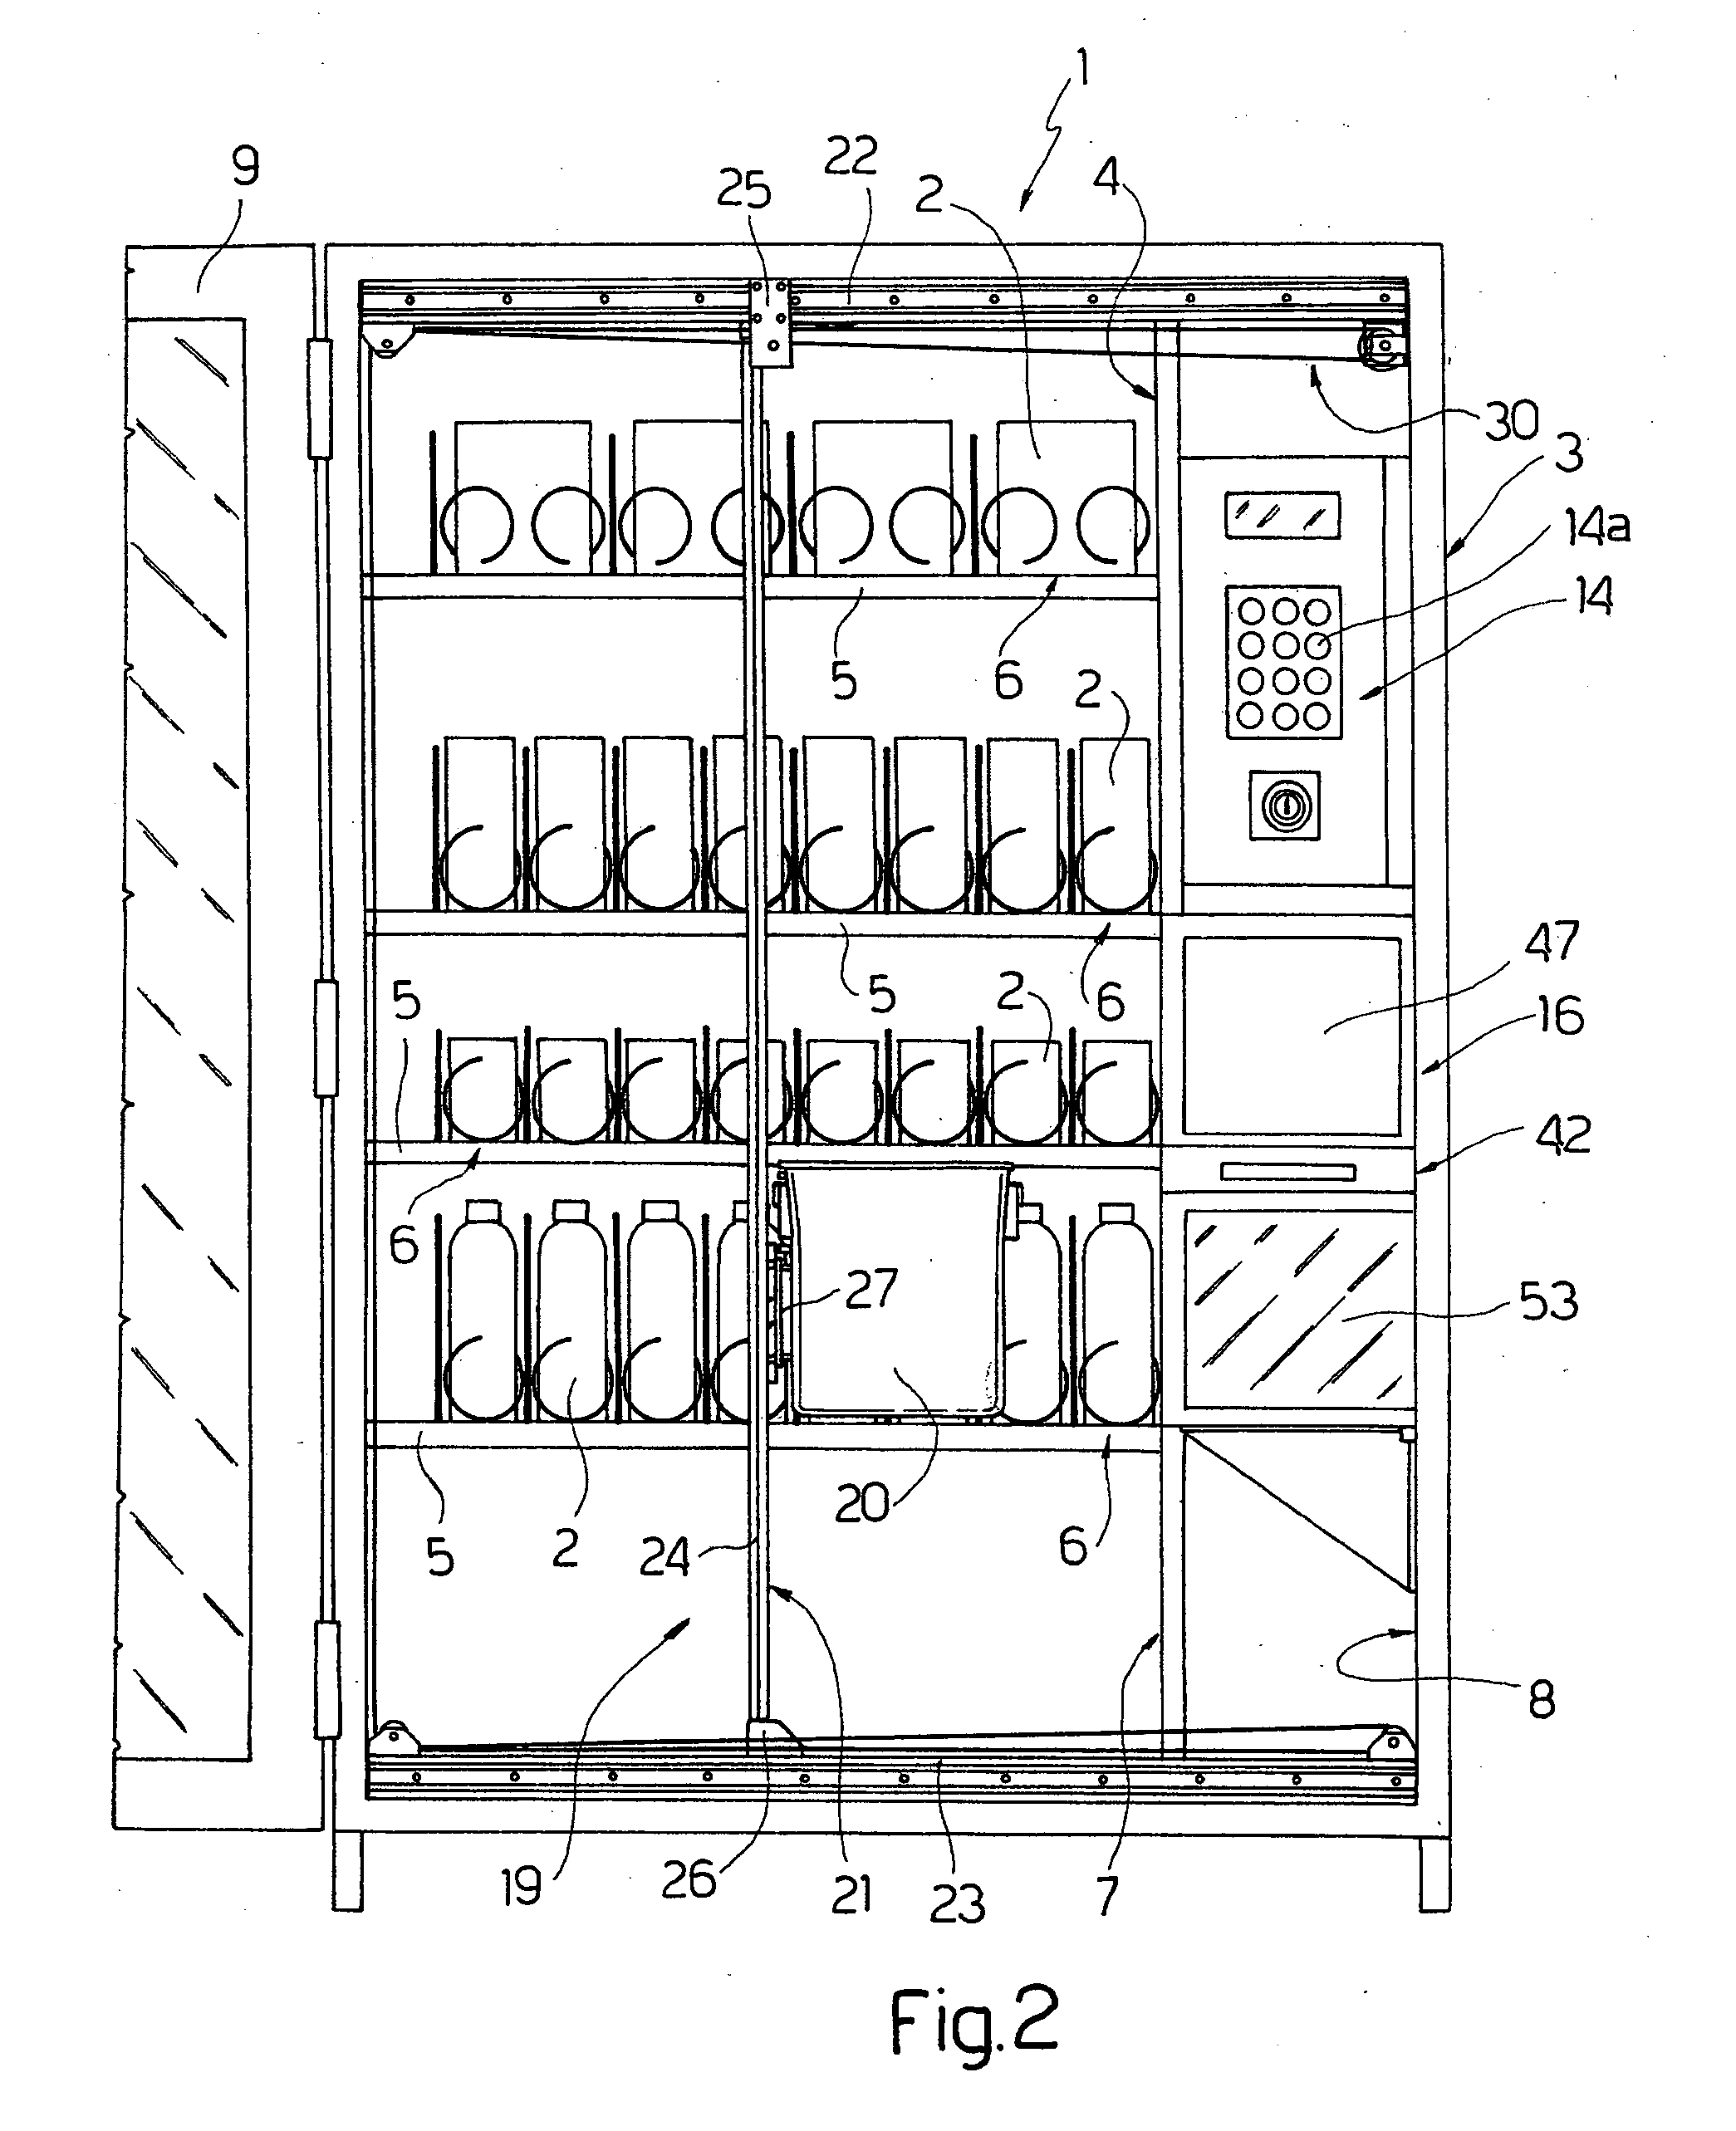 Product dispensing method and vending machine